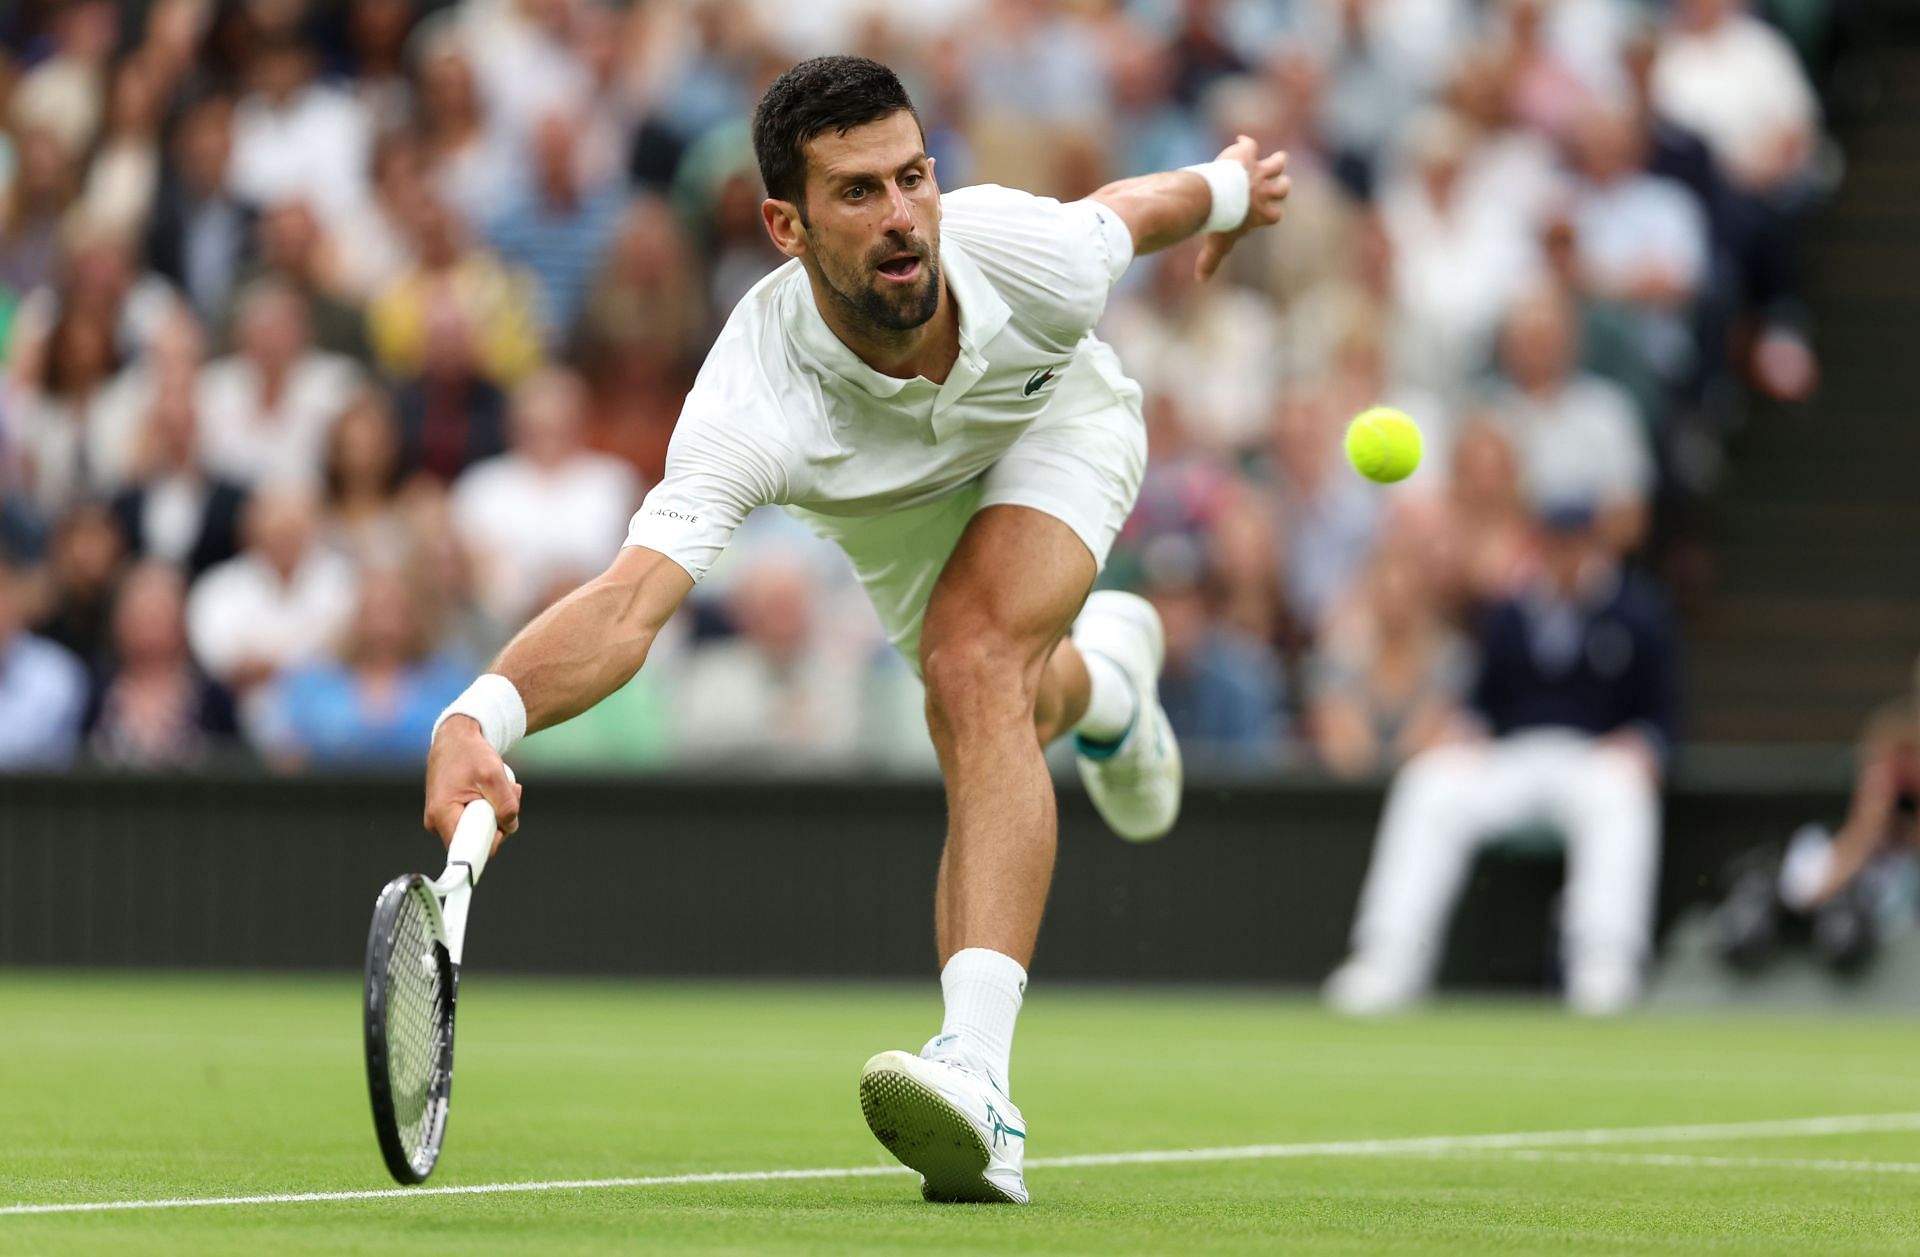 Novak Djokovic in action during his semifinal encounter against Jannik Sinner at Wimbledon